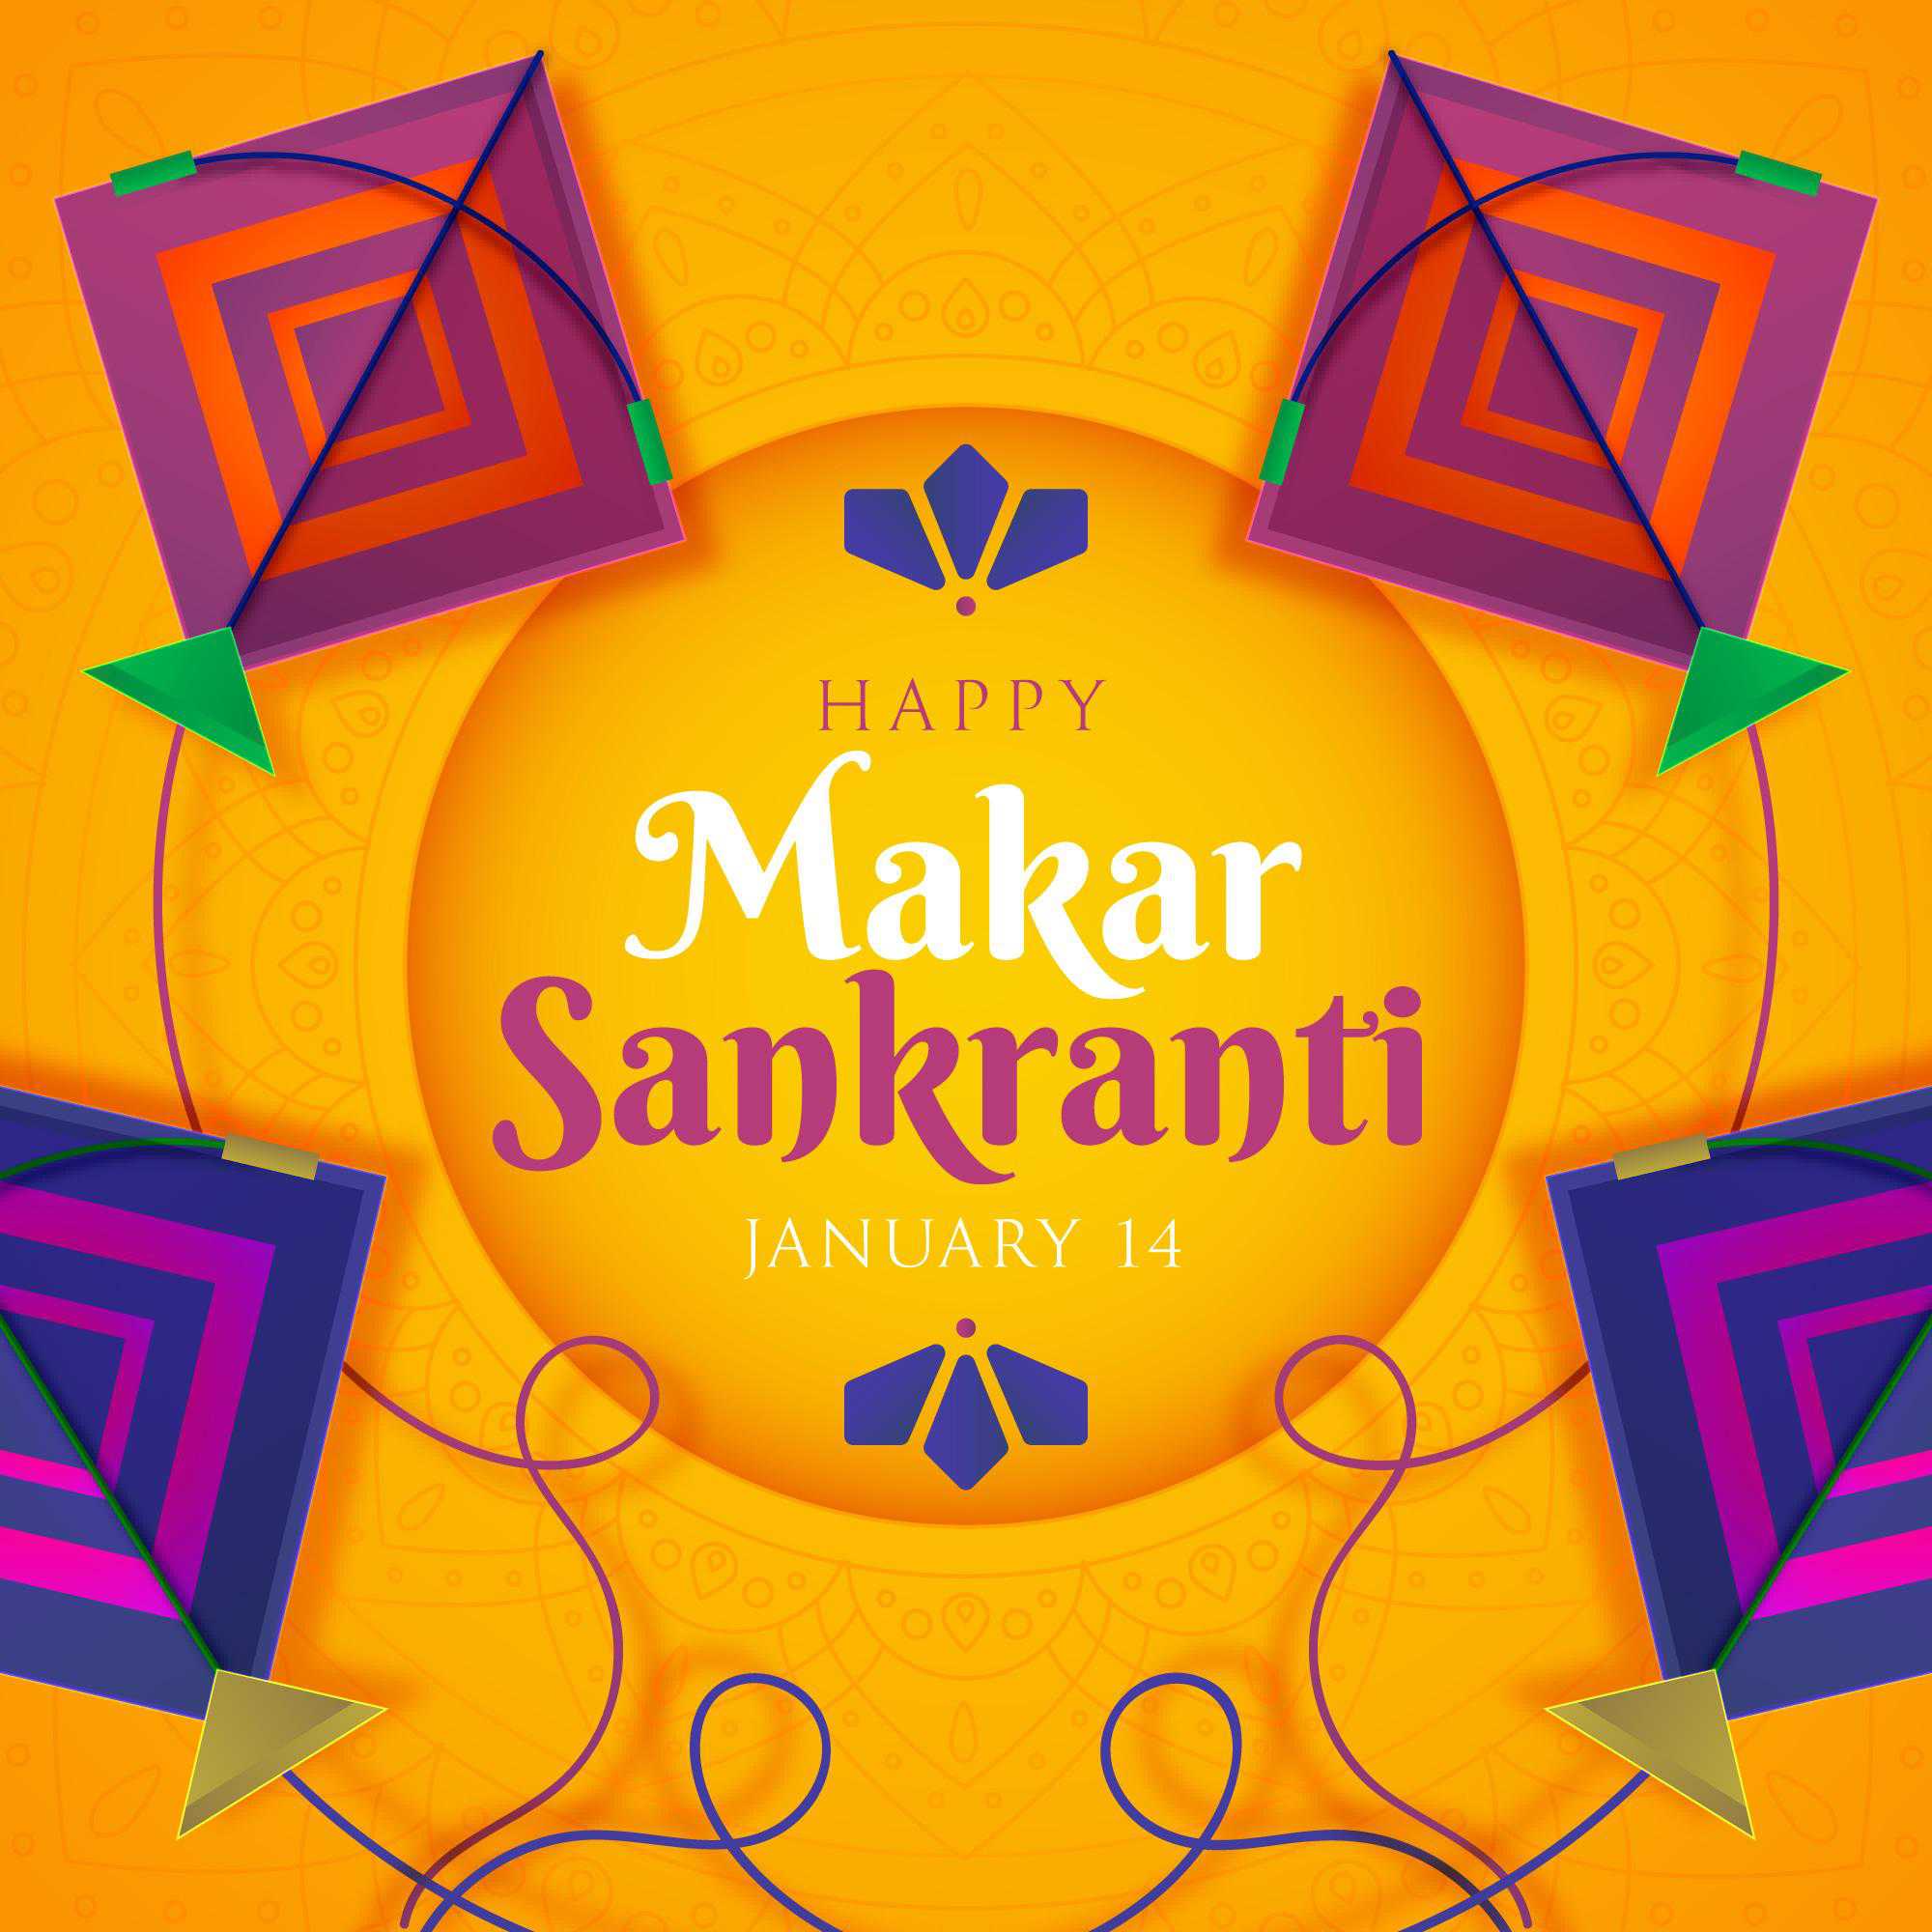 Happy Makar Sankranti wishes quotes